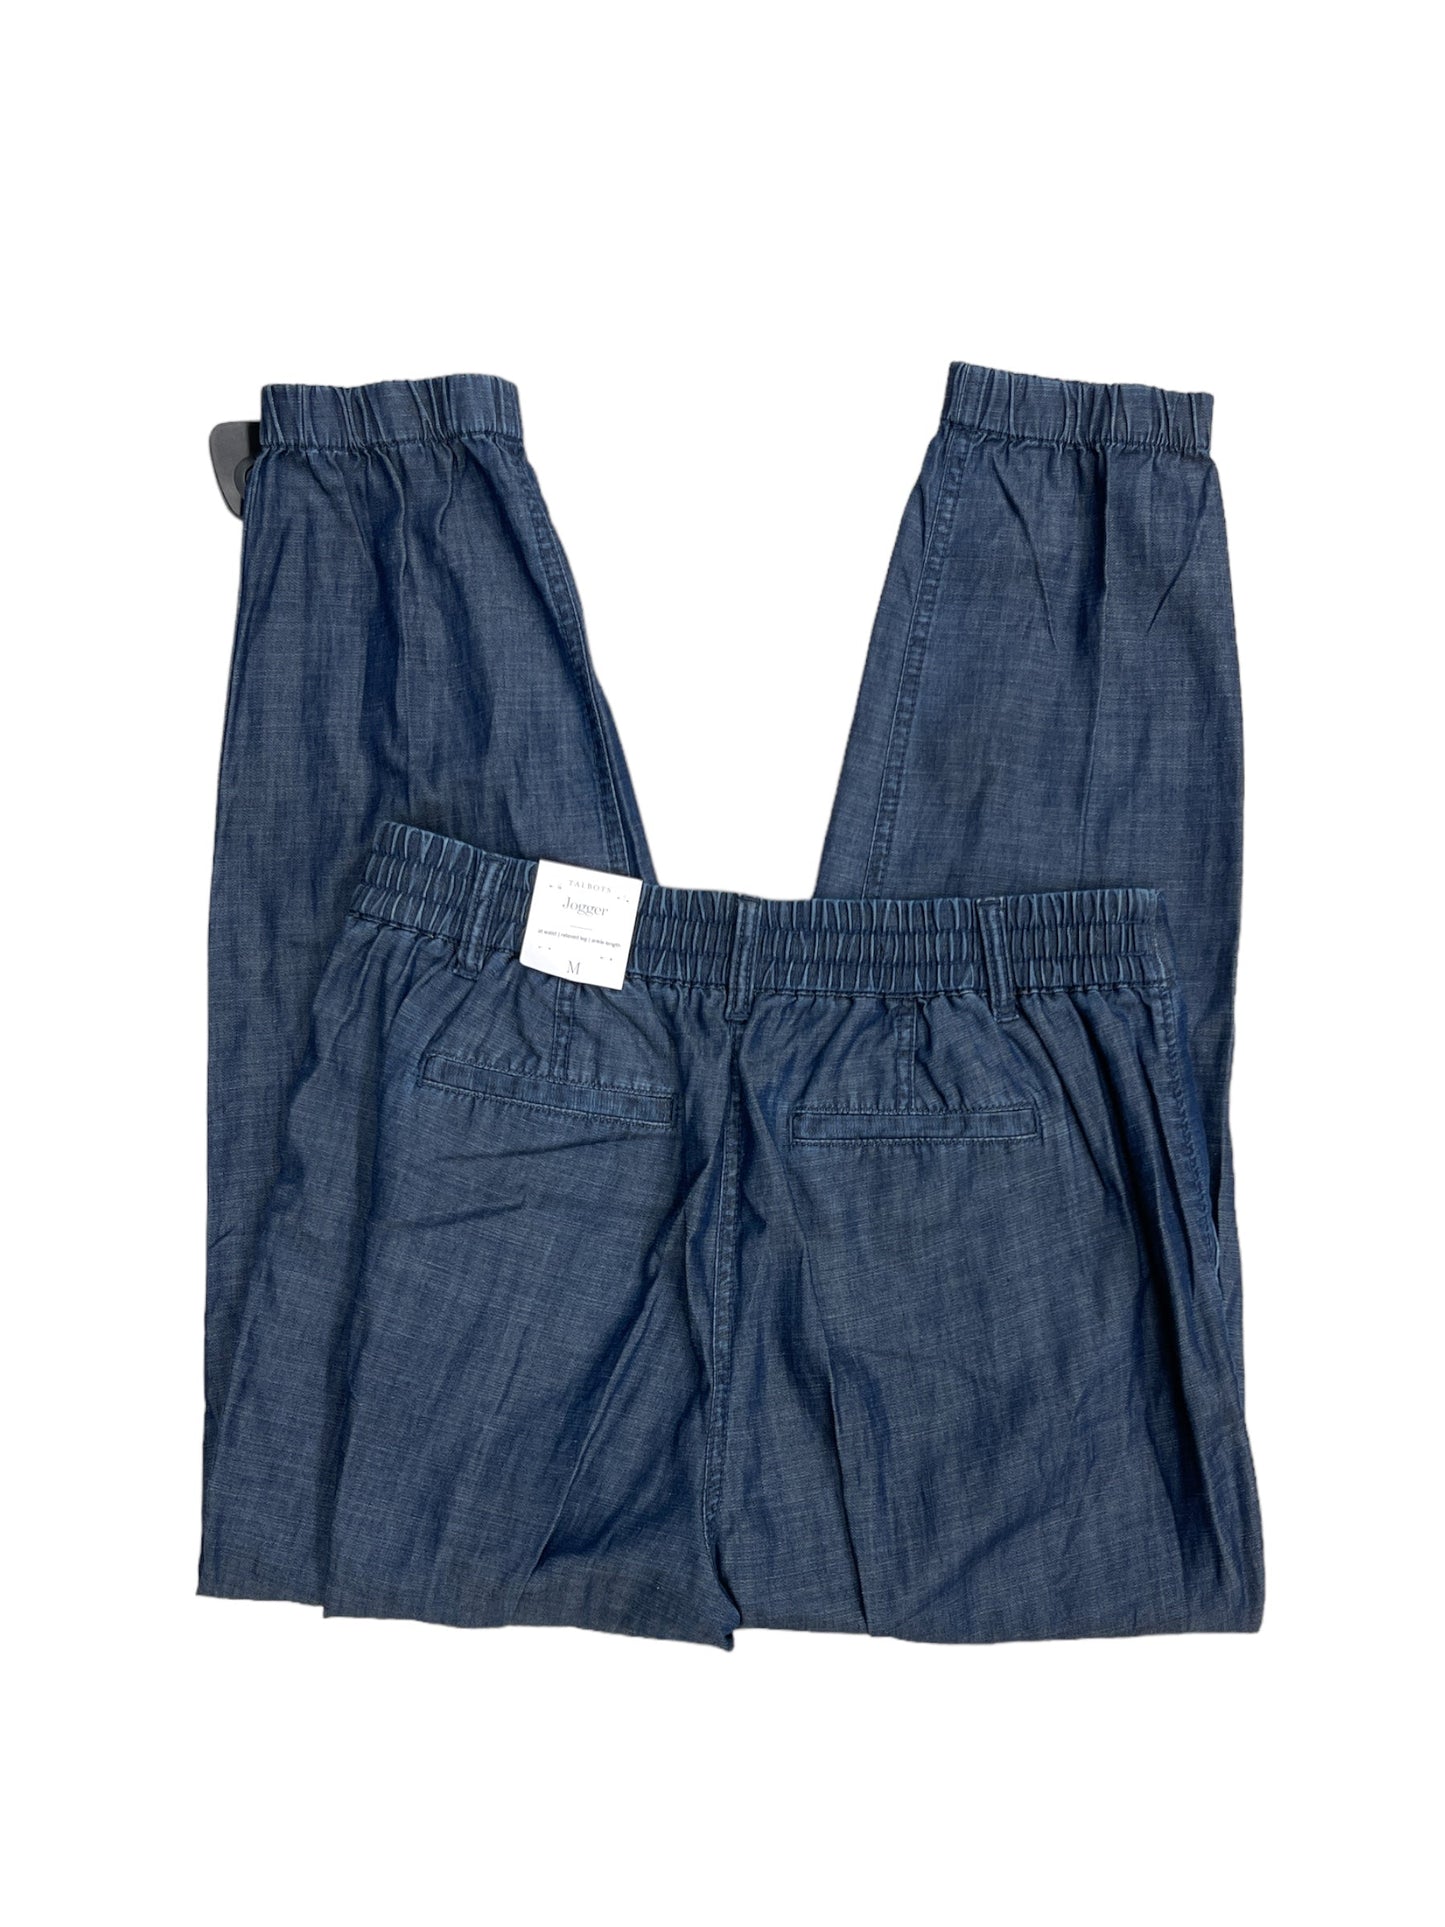 Blue Denim Pants Other Talbots, Size M